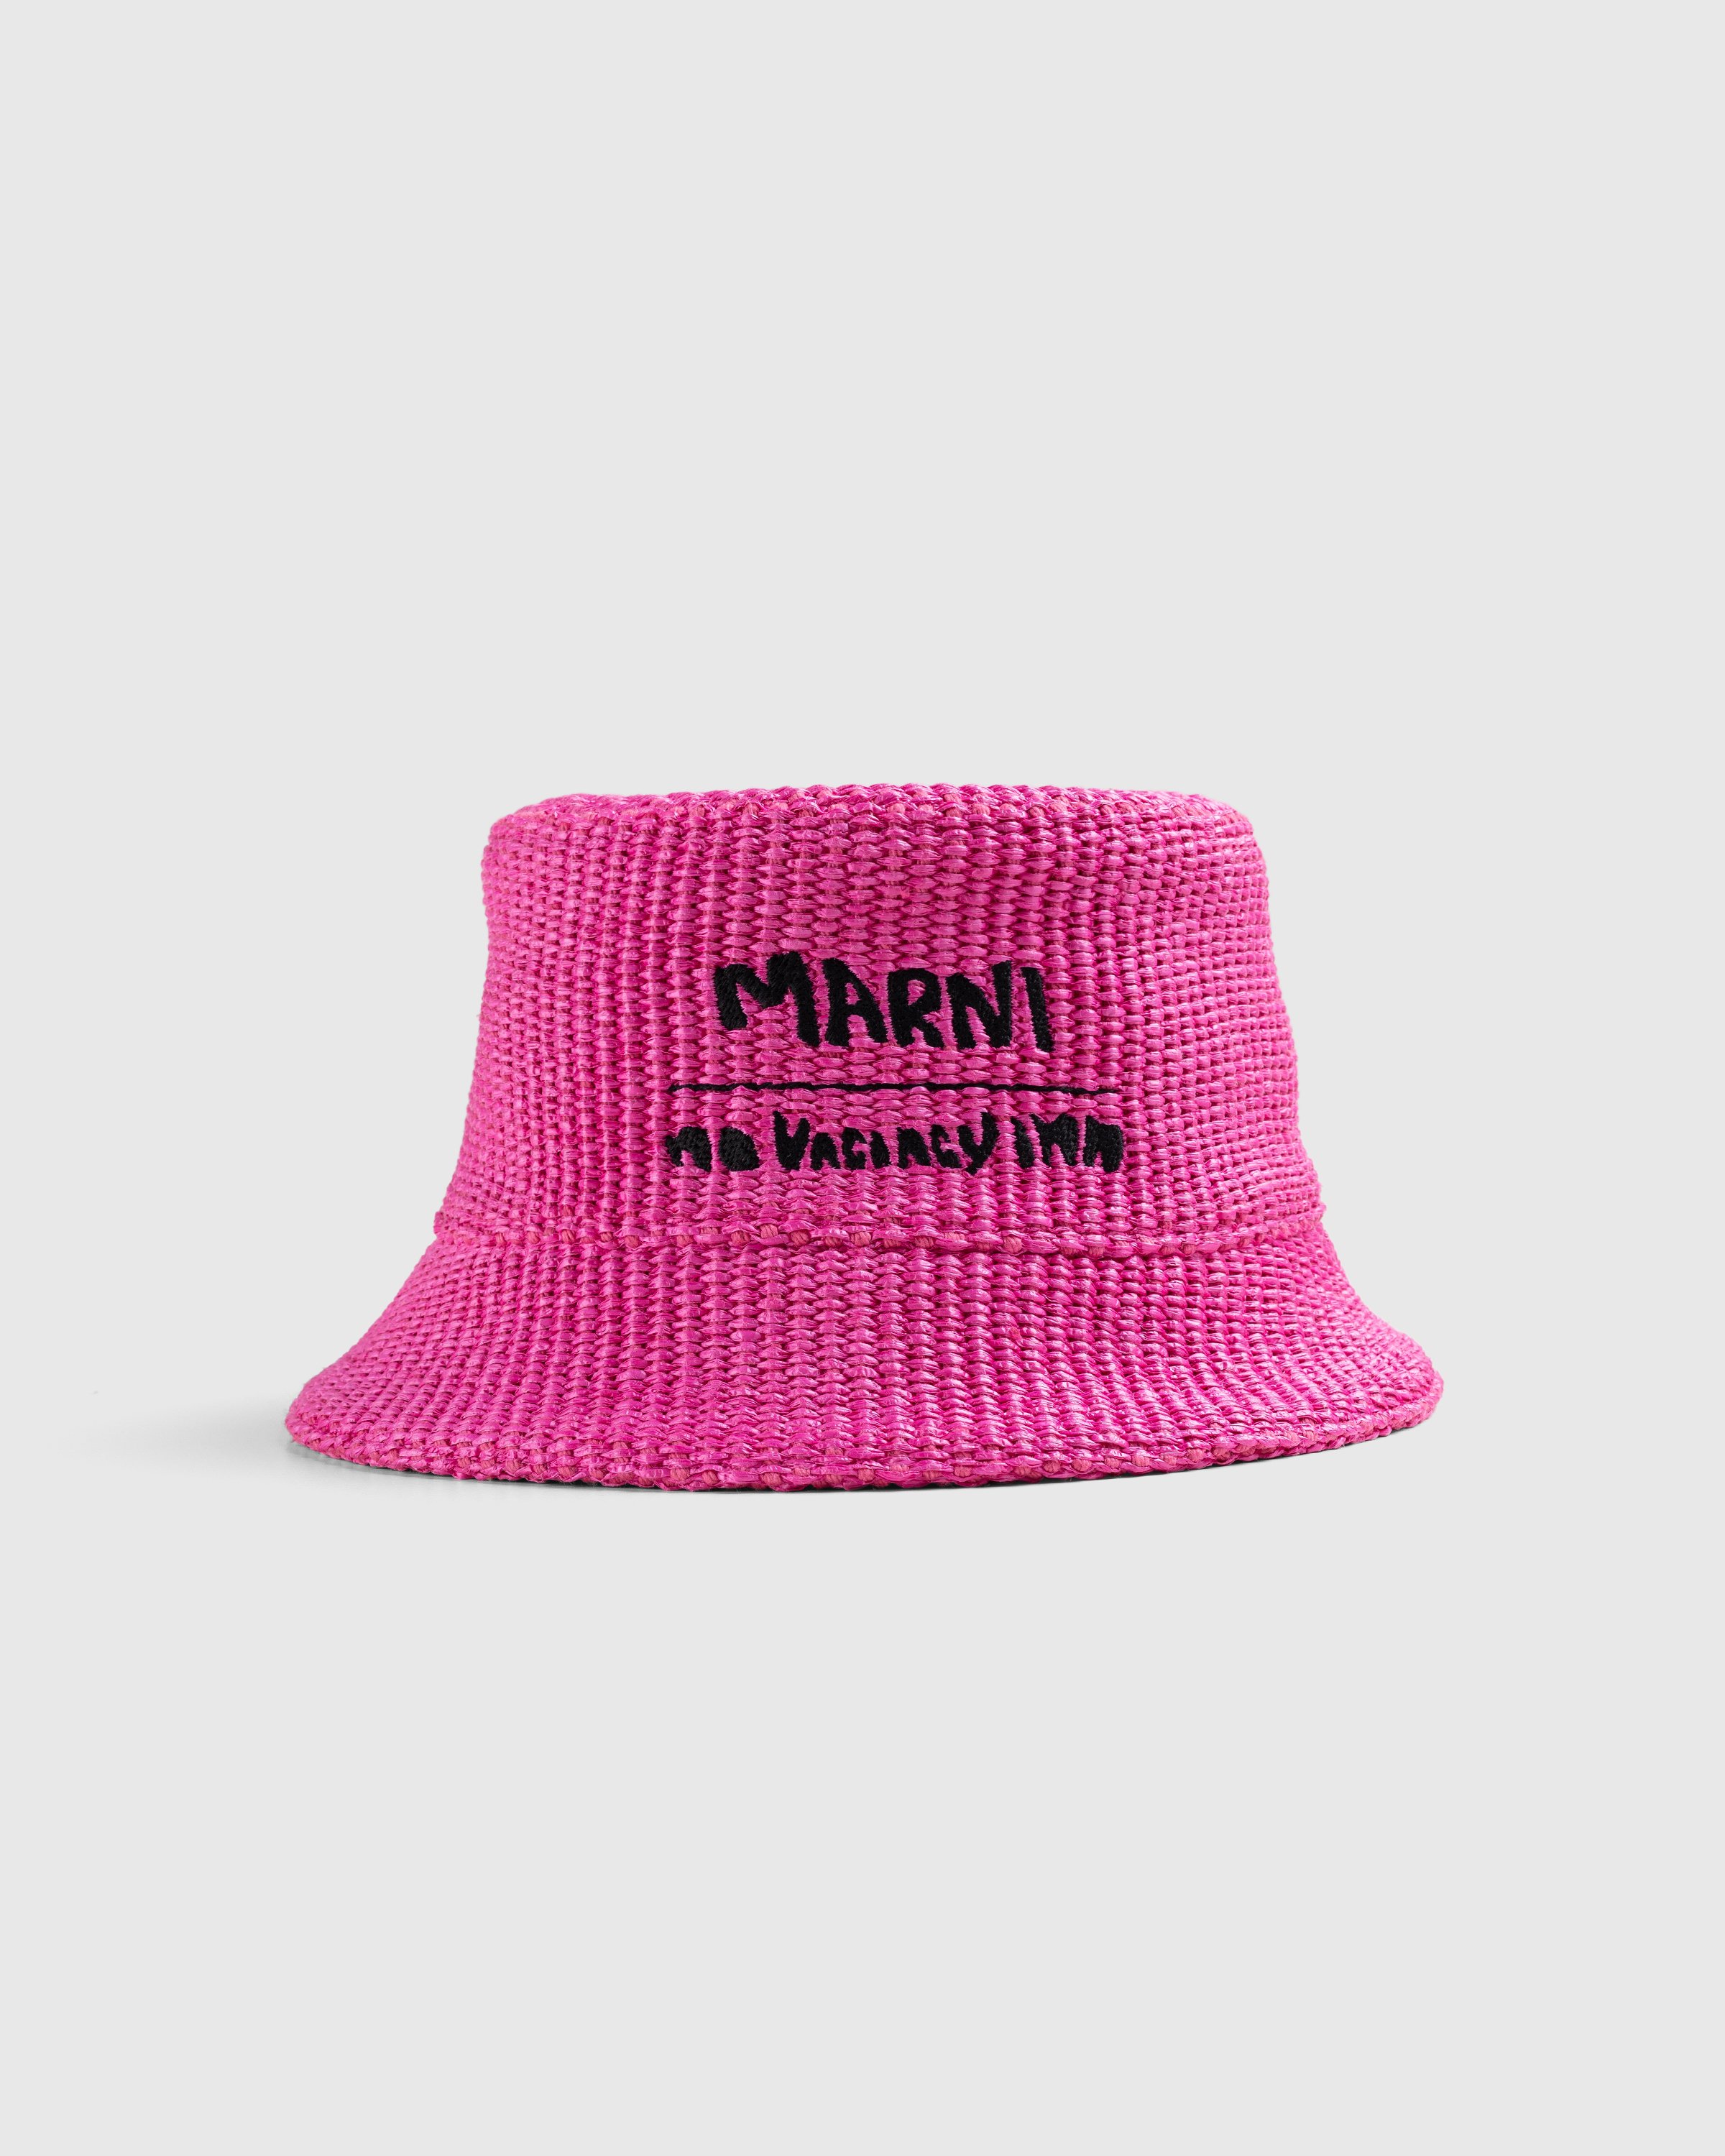 Marni x No Vacancy Inn - Raffia Bucket Hat Fuschia - Accessories - Pink - Image 1